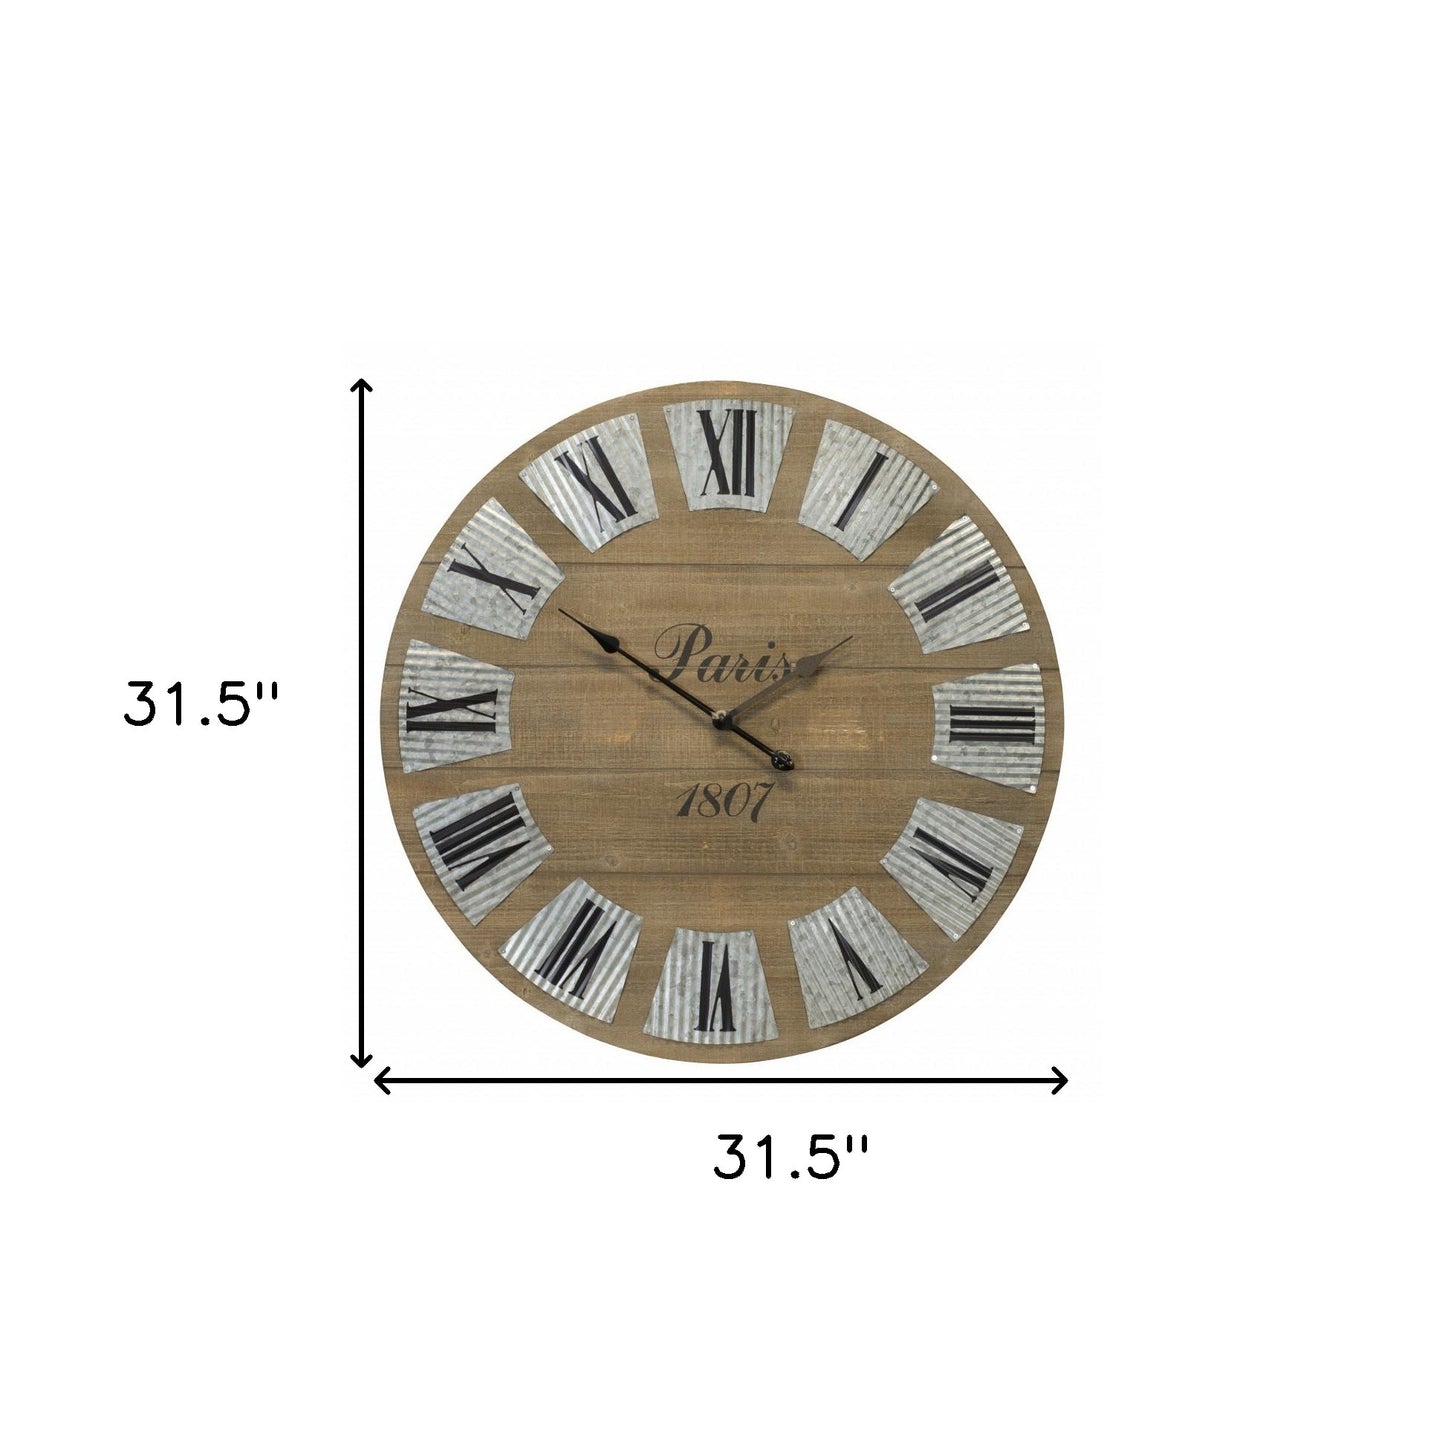 32" Round Brown Wood And Metal Analog Wall Clock